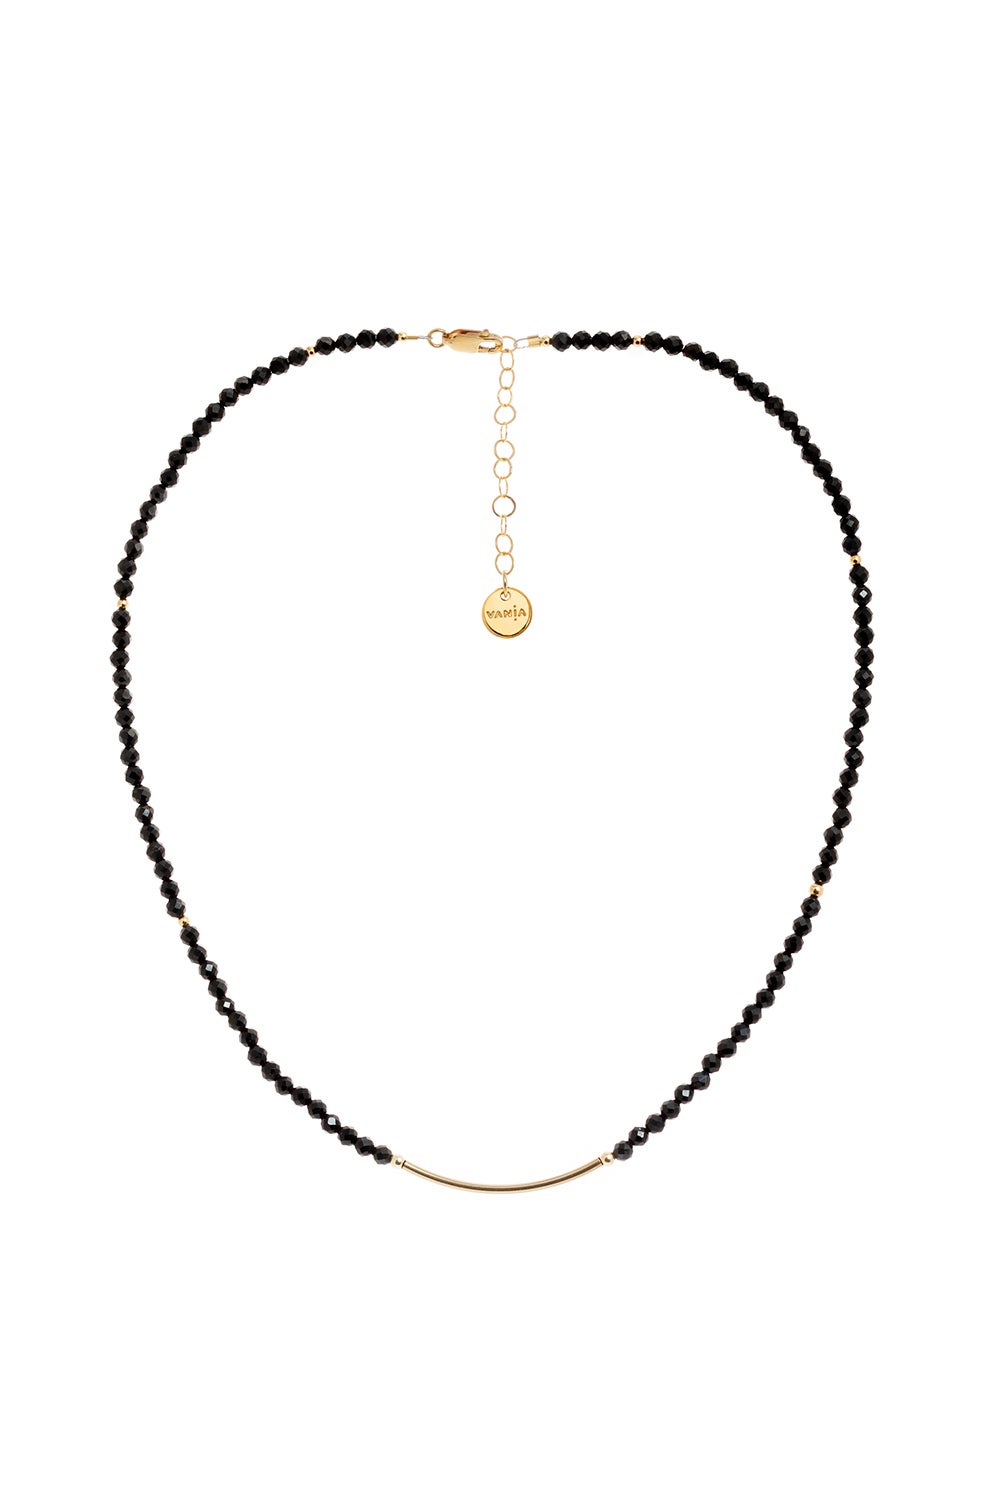 Vania Black Tourmaline Necklace